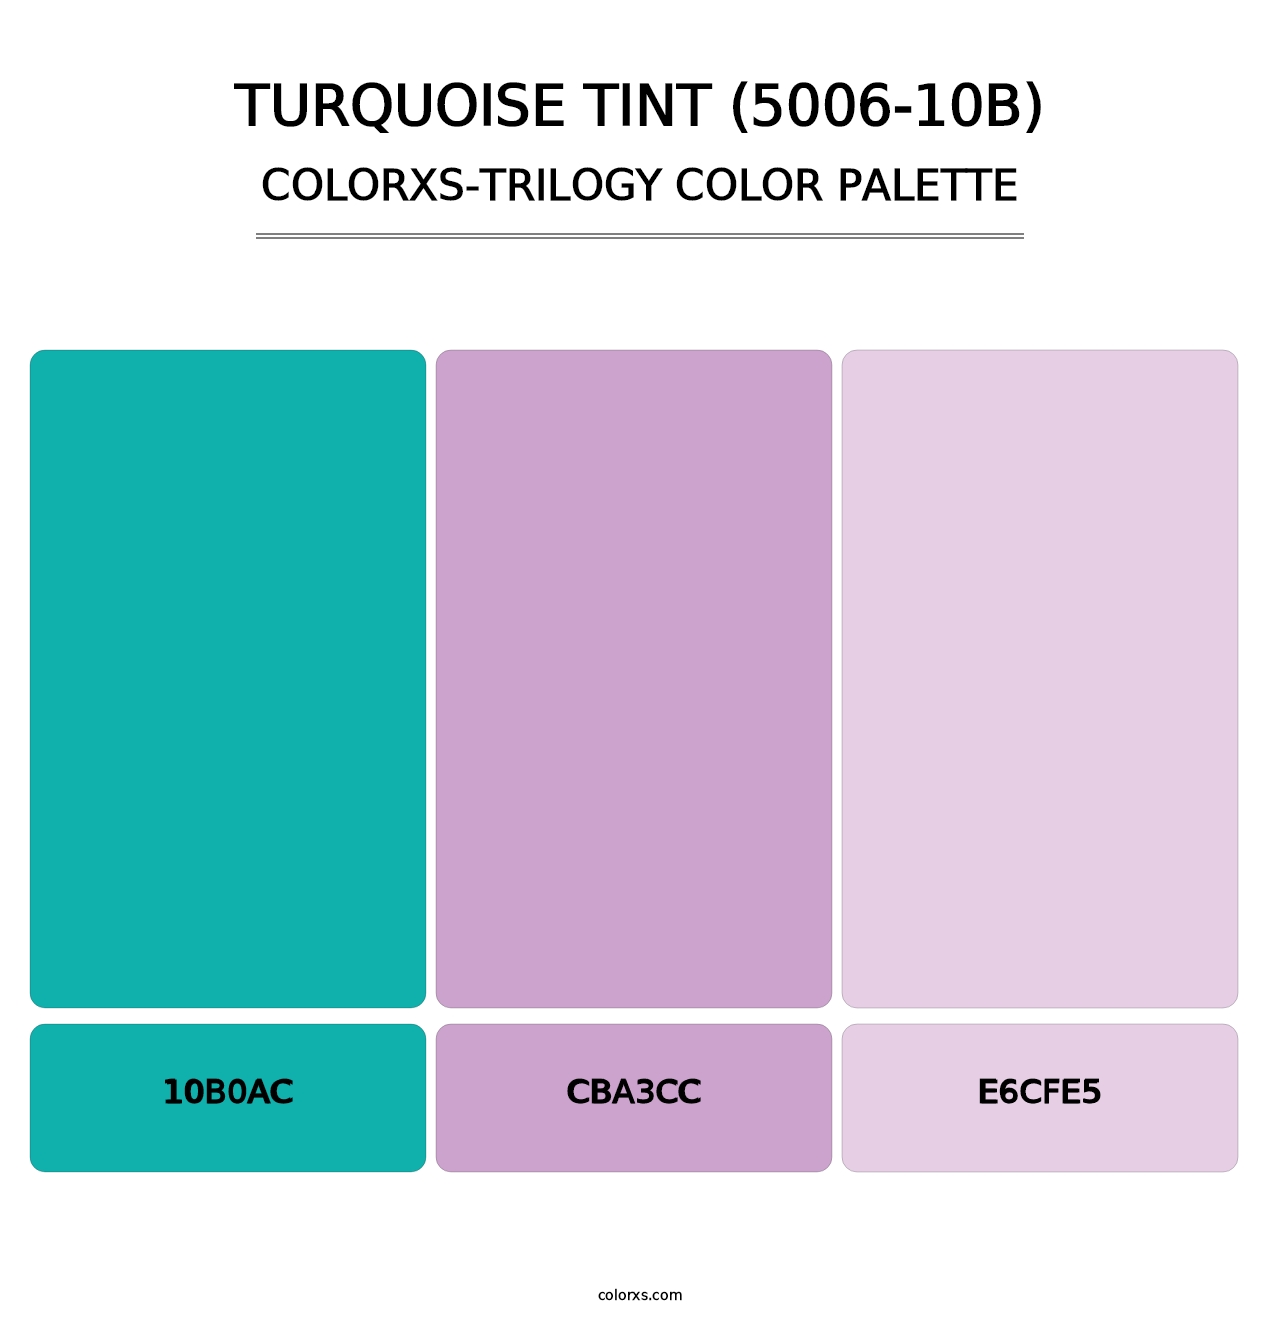 Turquoise Tint (5006-10B) - Colorxs Trilogy Palette